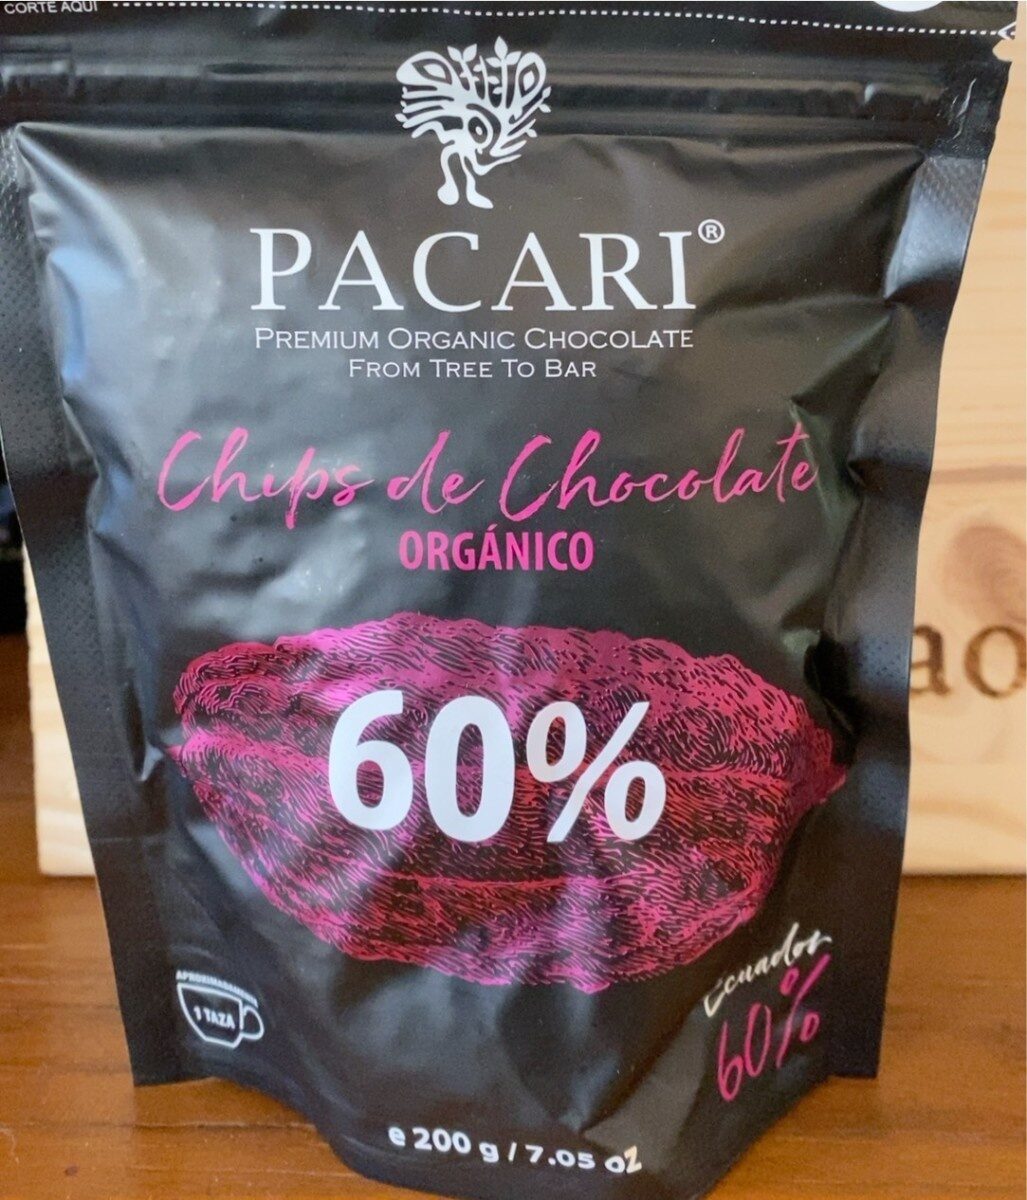 Chips de chocolate organico - Product - es